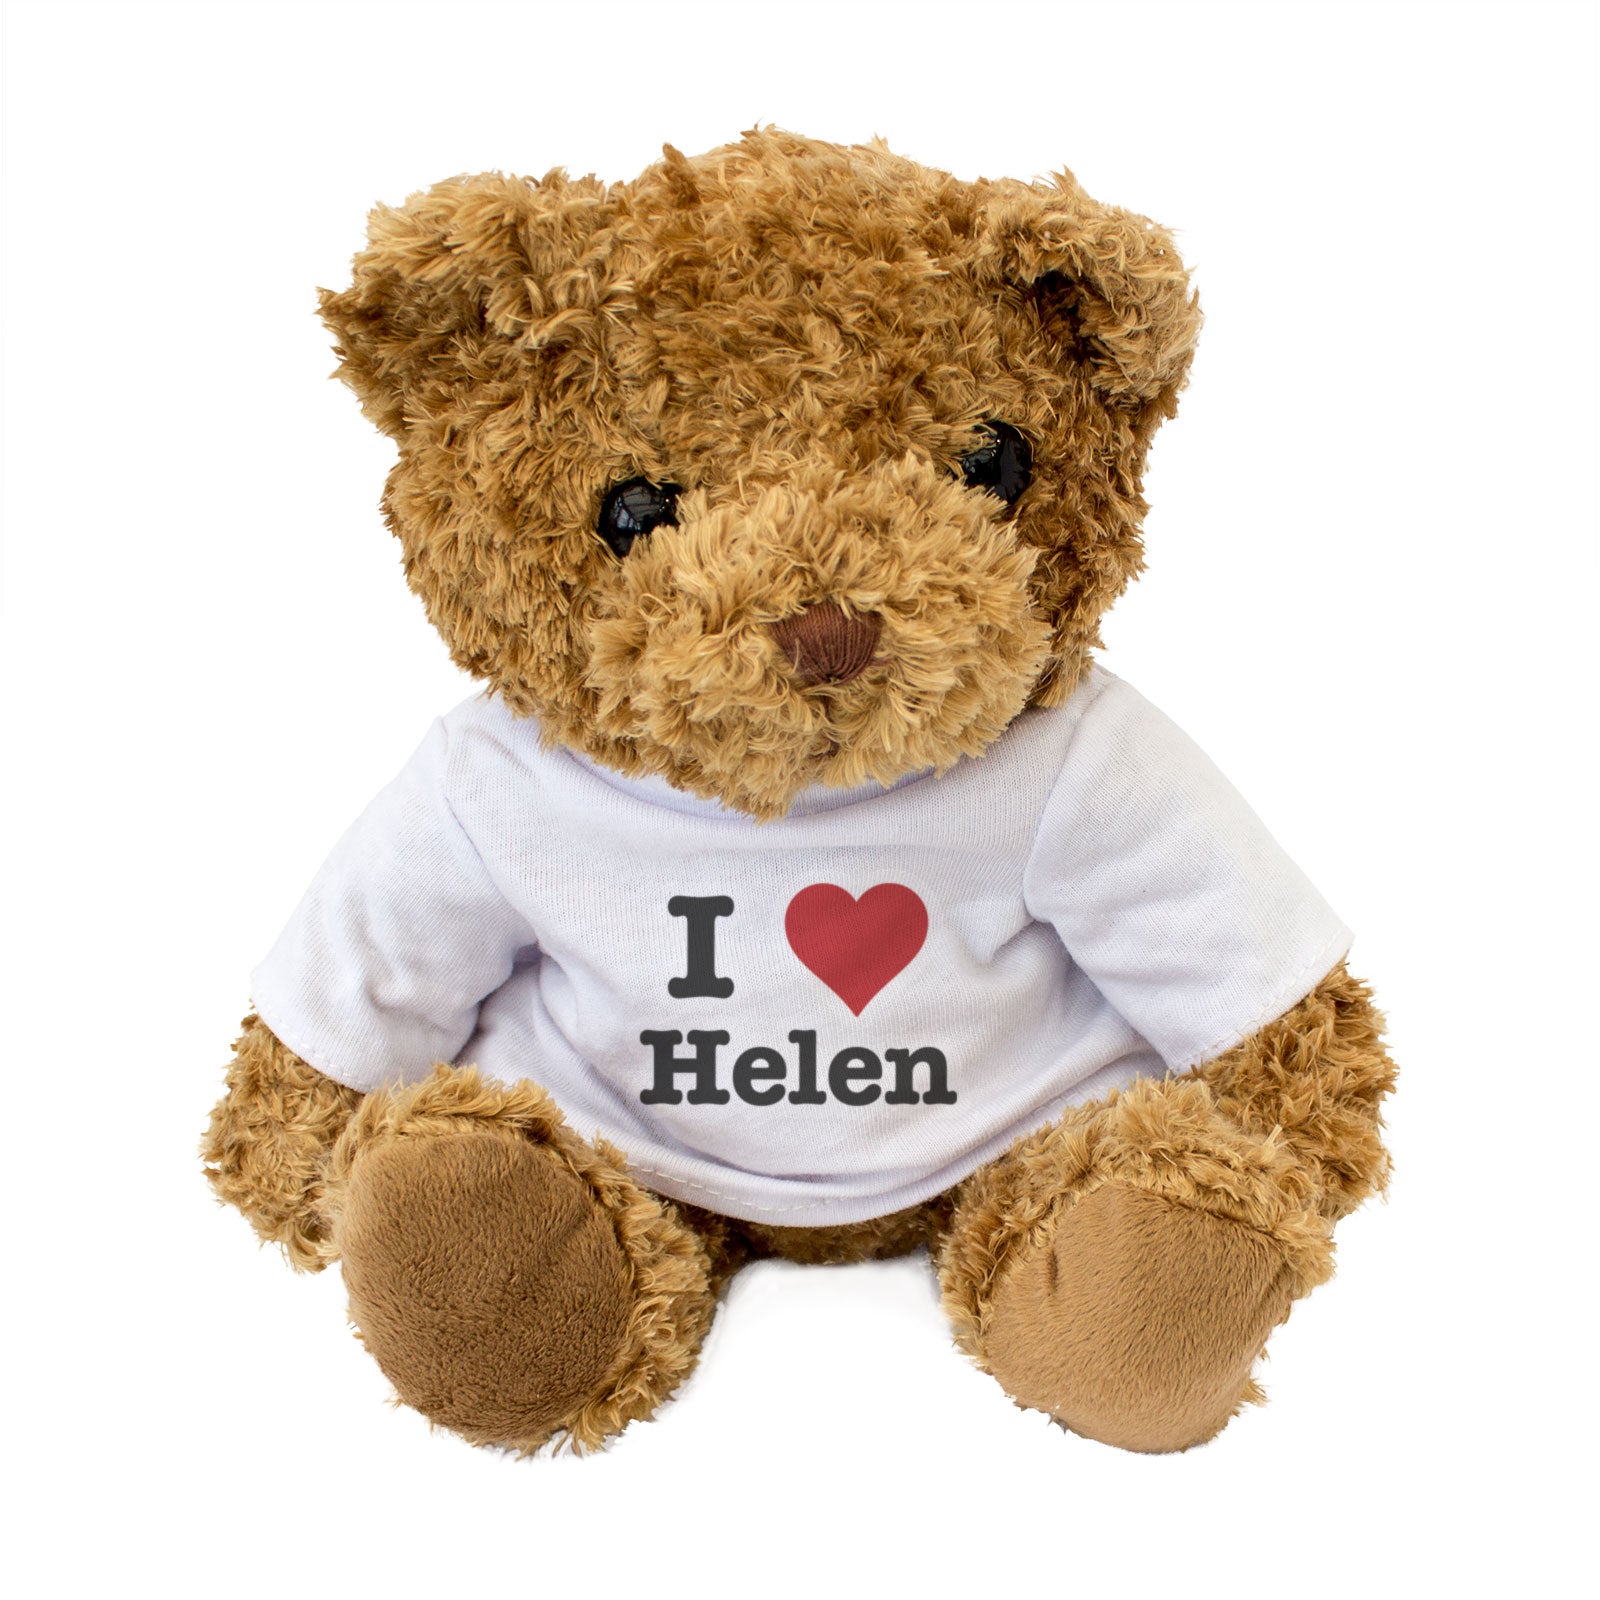 I Love Helen - Teddy Bear